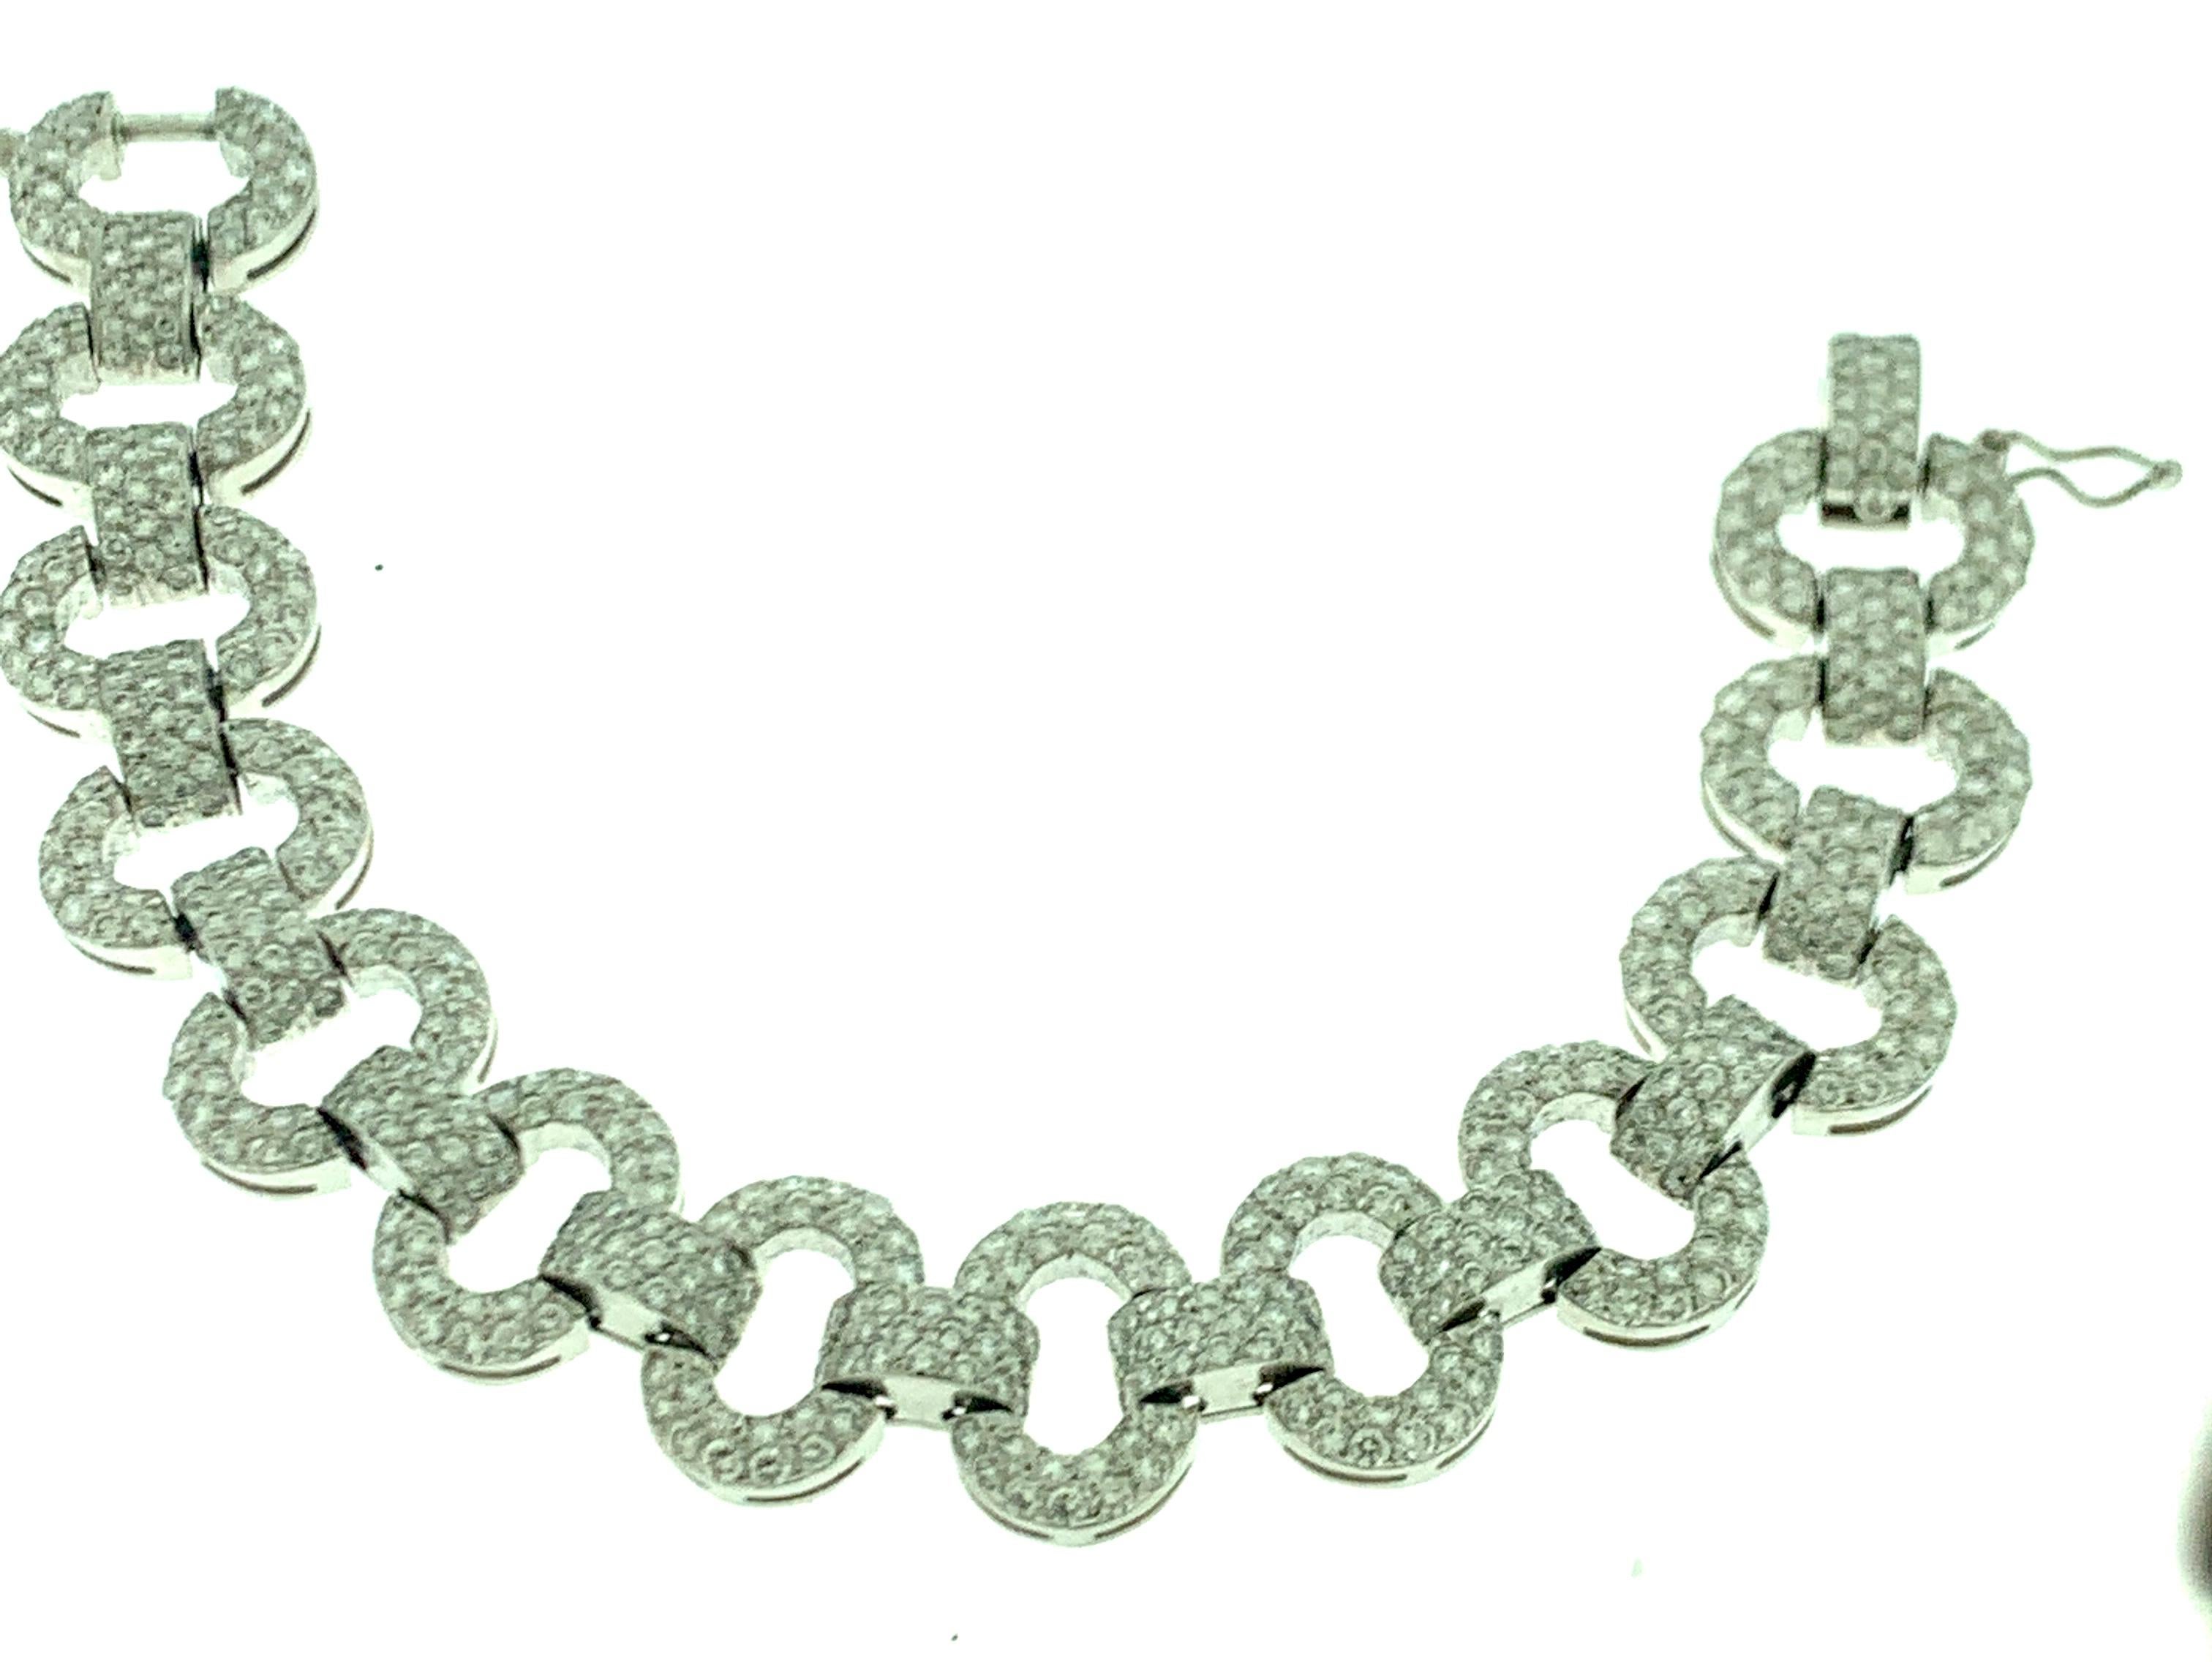 15 Carat Diamond Bracelet in 18 Karat White Gold, 63 Grams, Estate 1